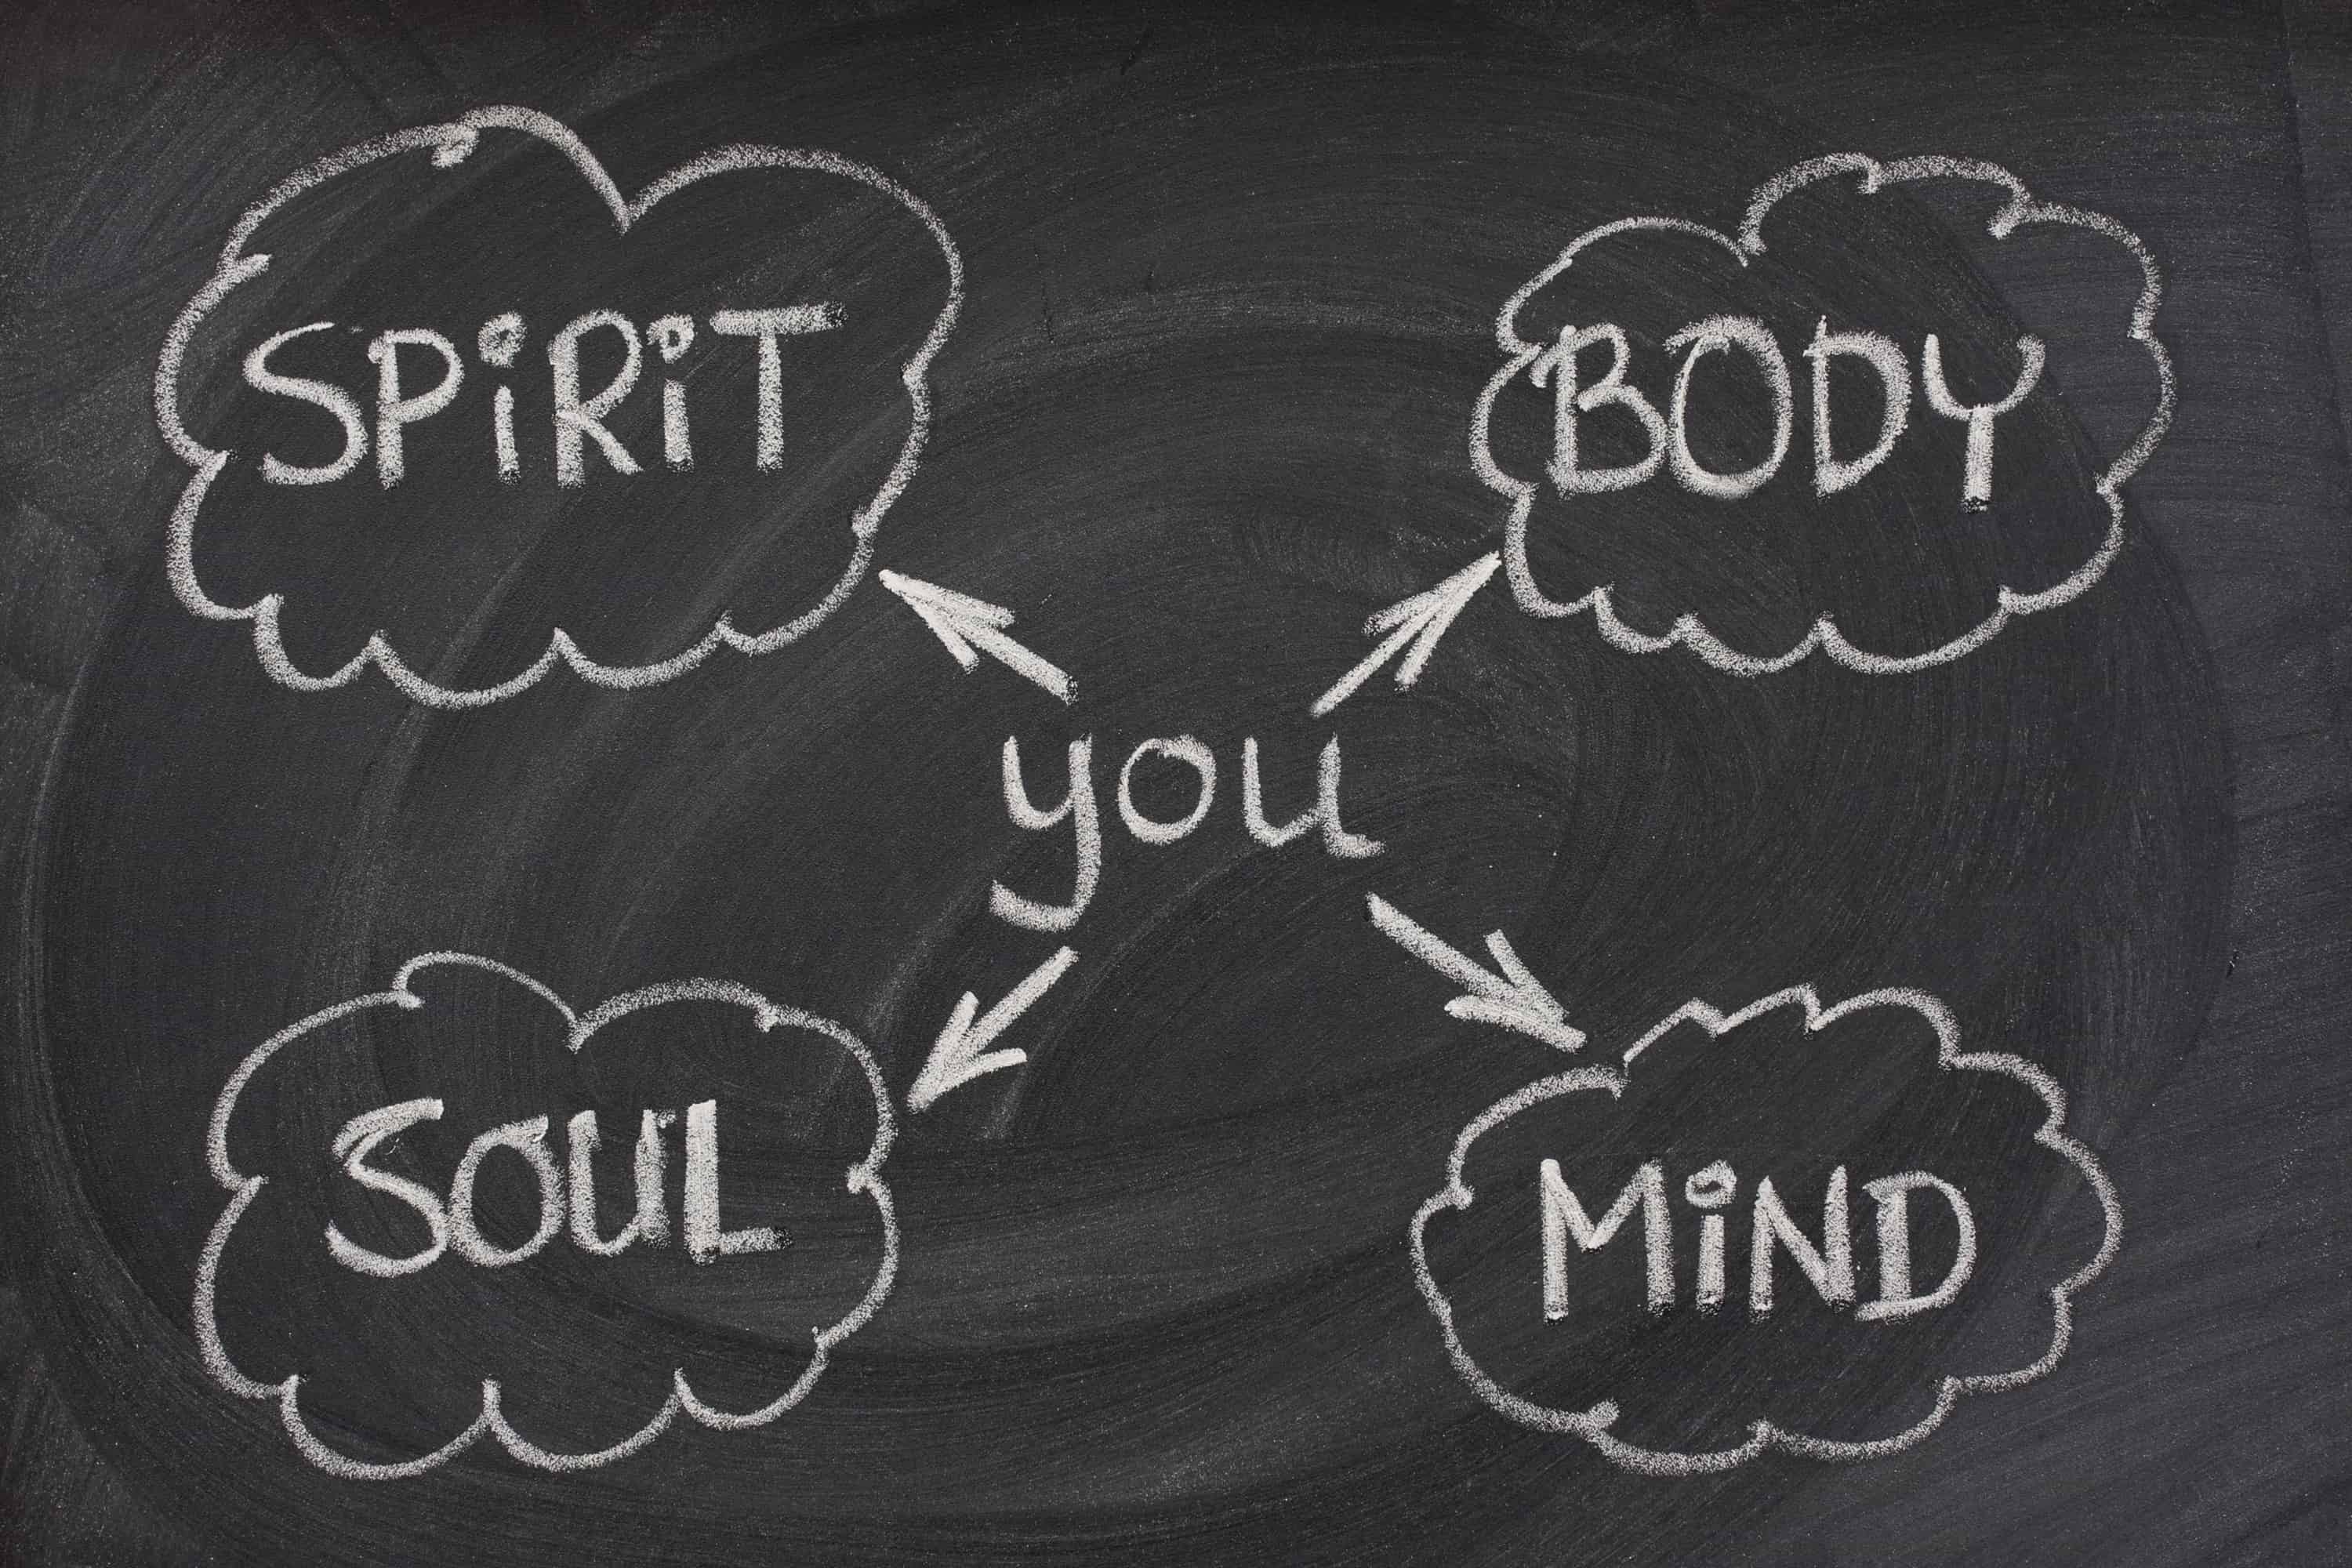 mind body spirit soul